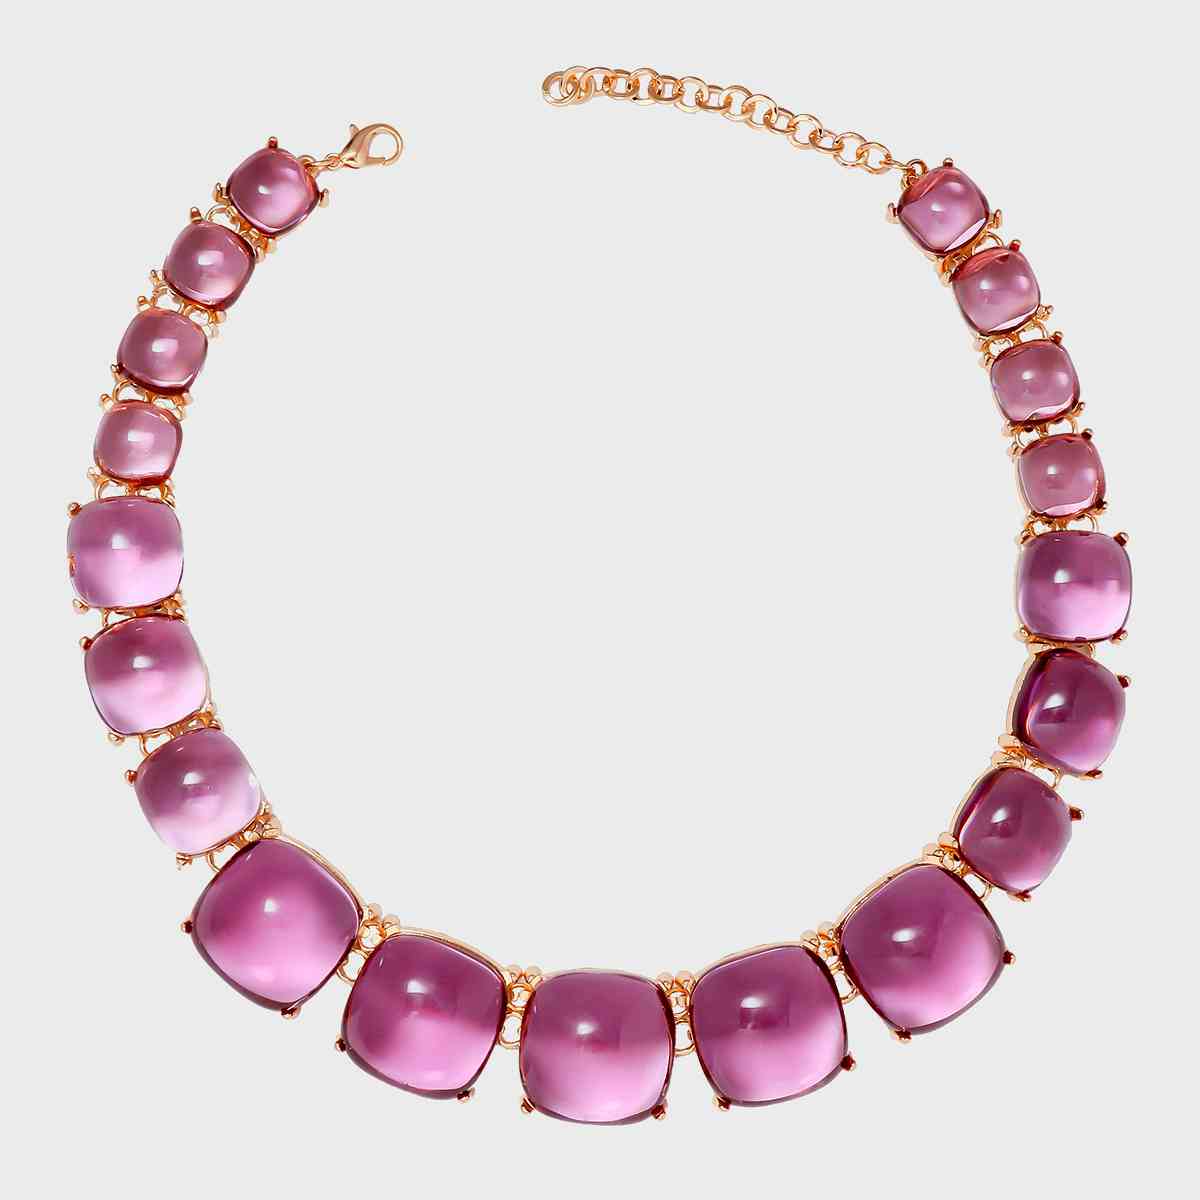 Alloy & Rhinestone Necklace Lilac One Size